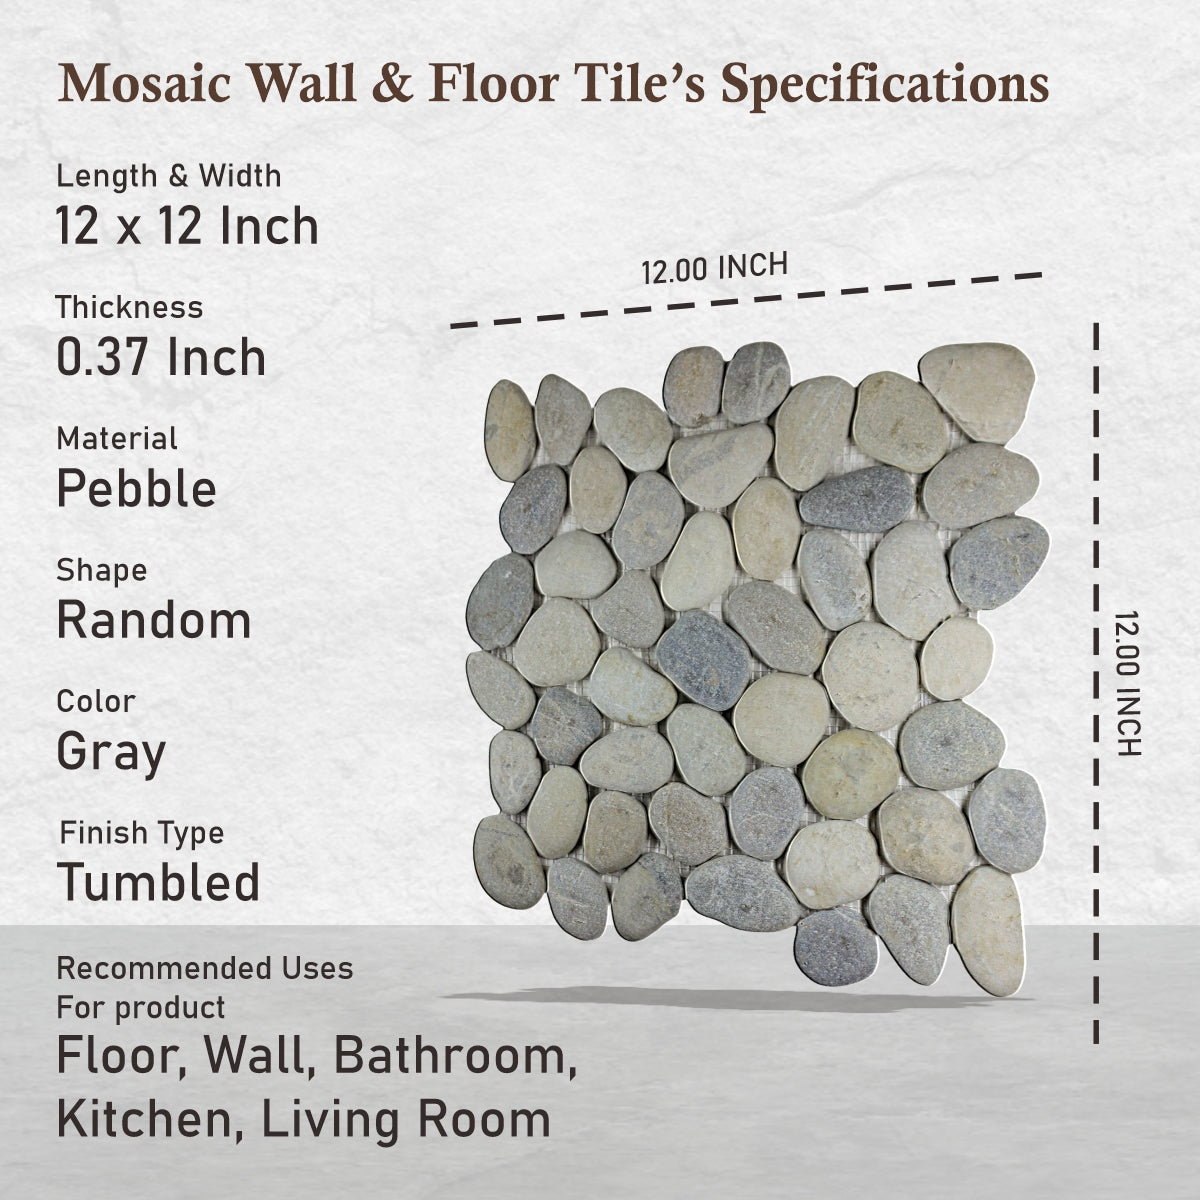 Pebble Grey Stone Mosaic Tiles, Natural Stone Floor Tile